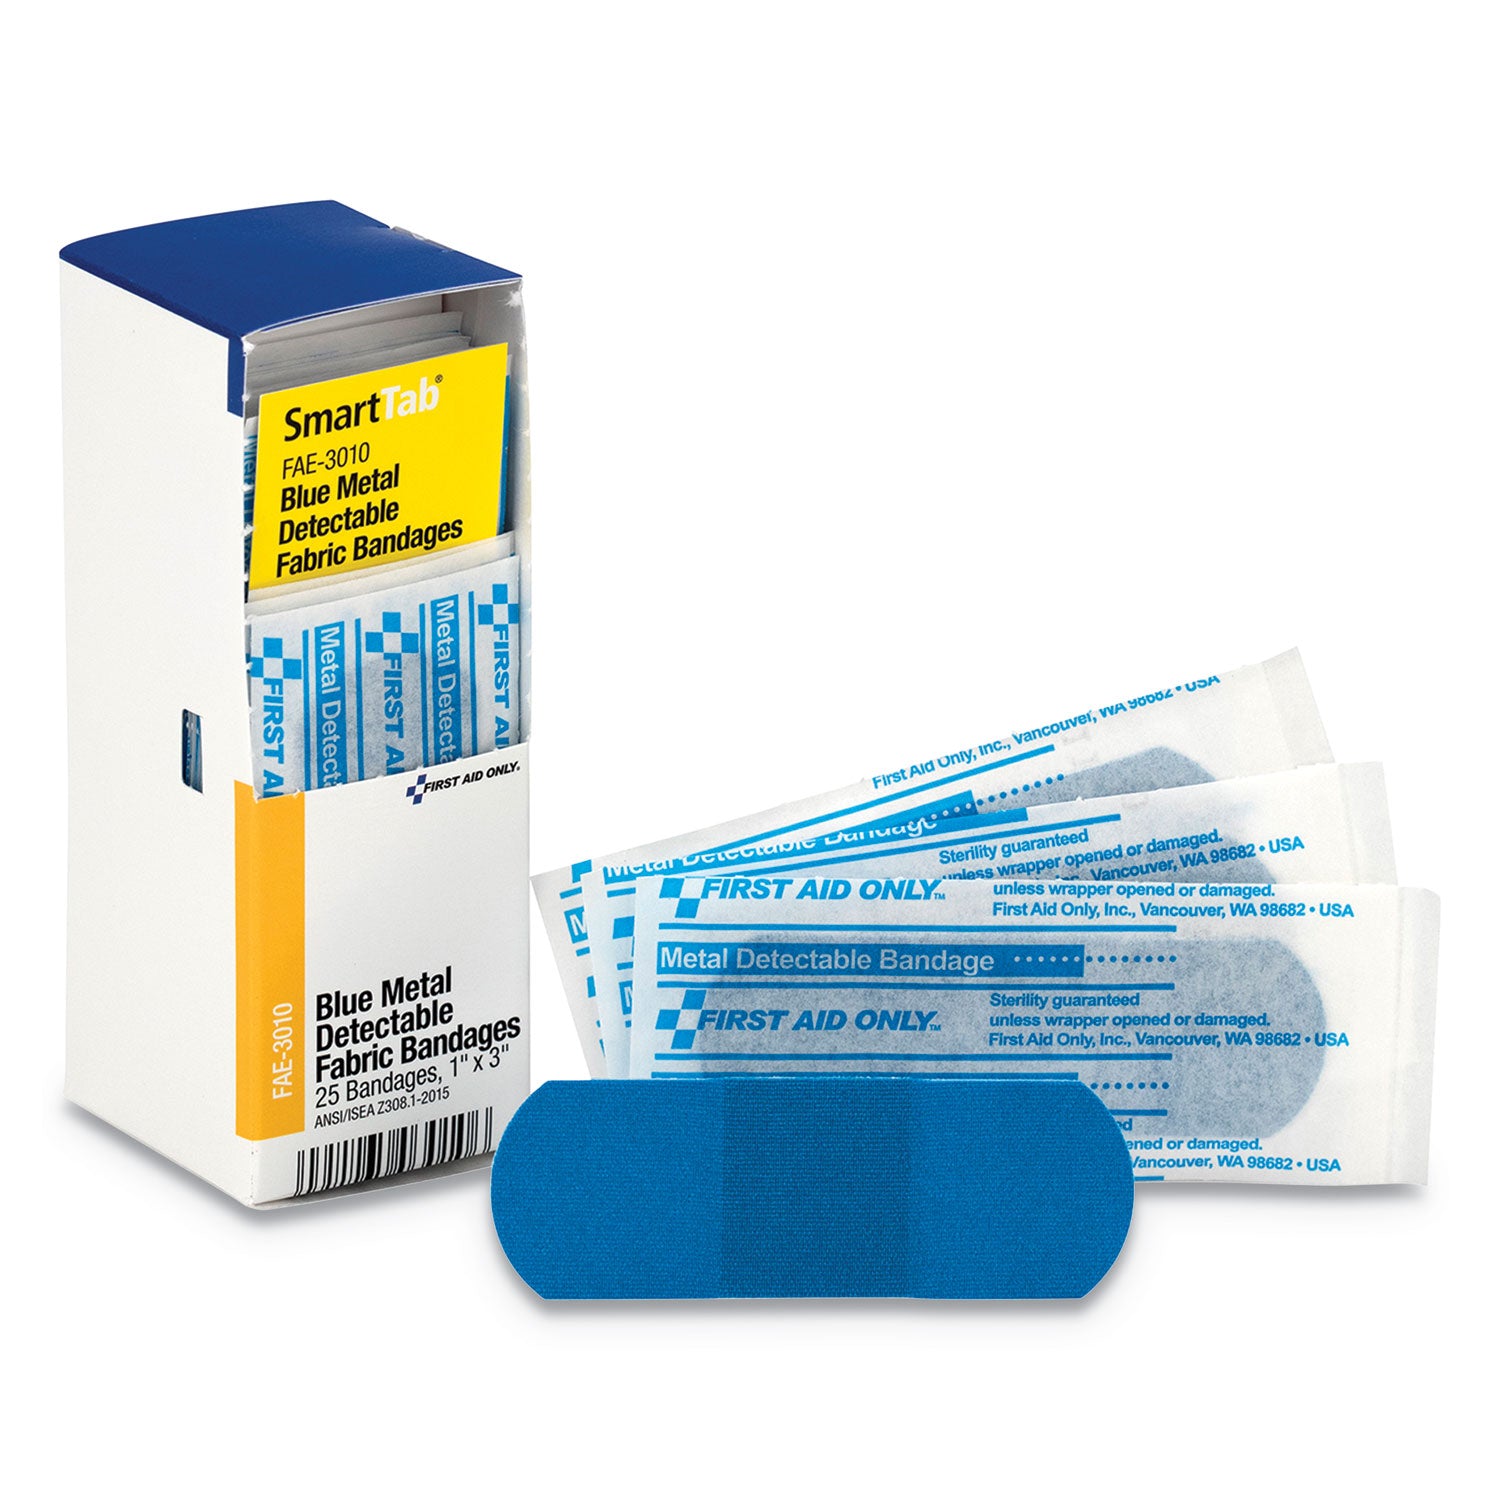 refill-f-smartcompliance-gen-cabinet-blue-metal-detectable-bandages1x325-bx_faofae3010 - 1